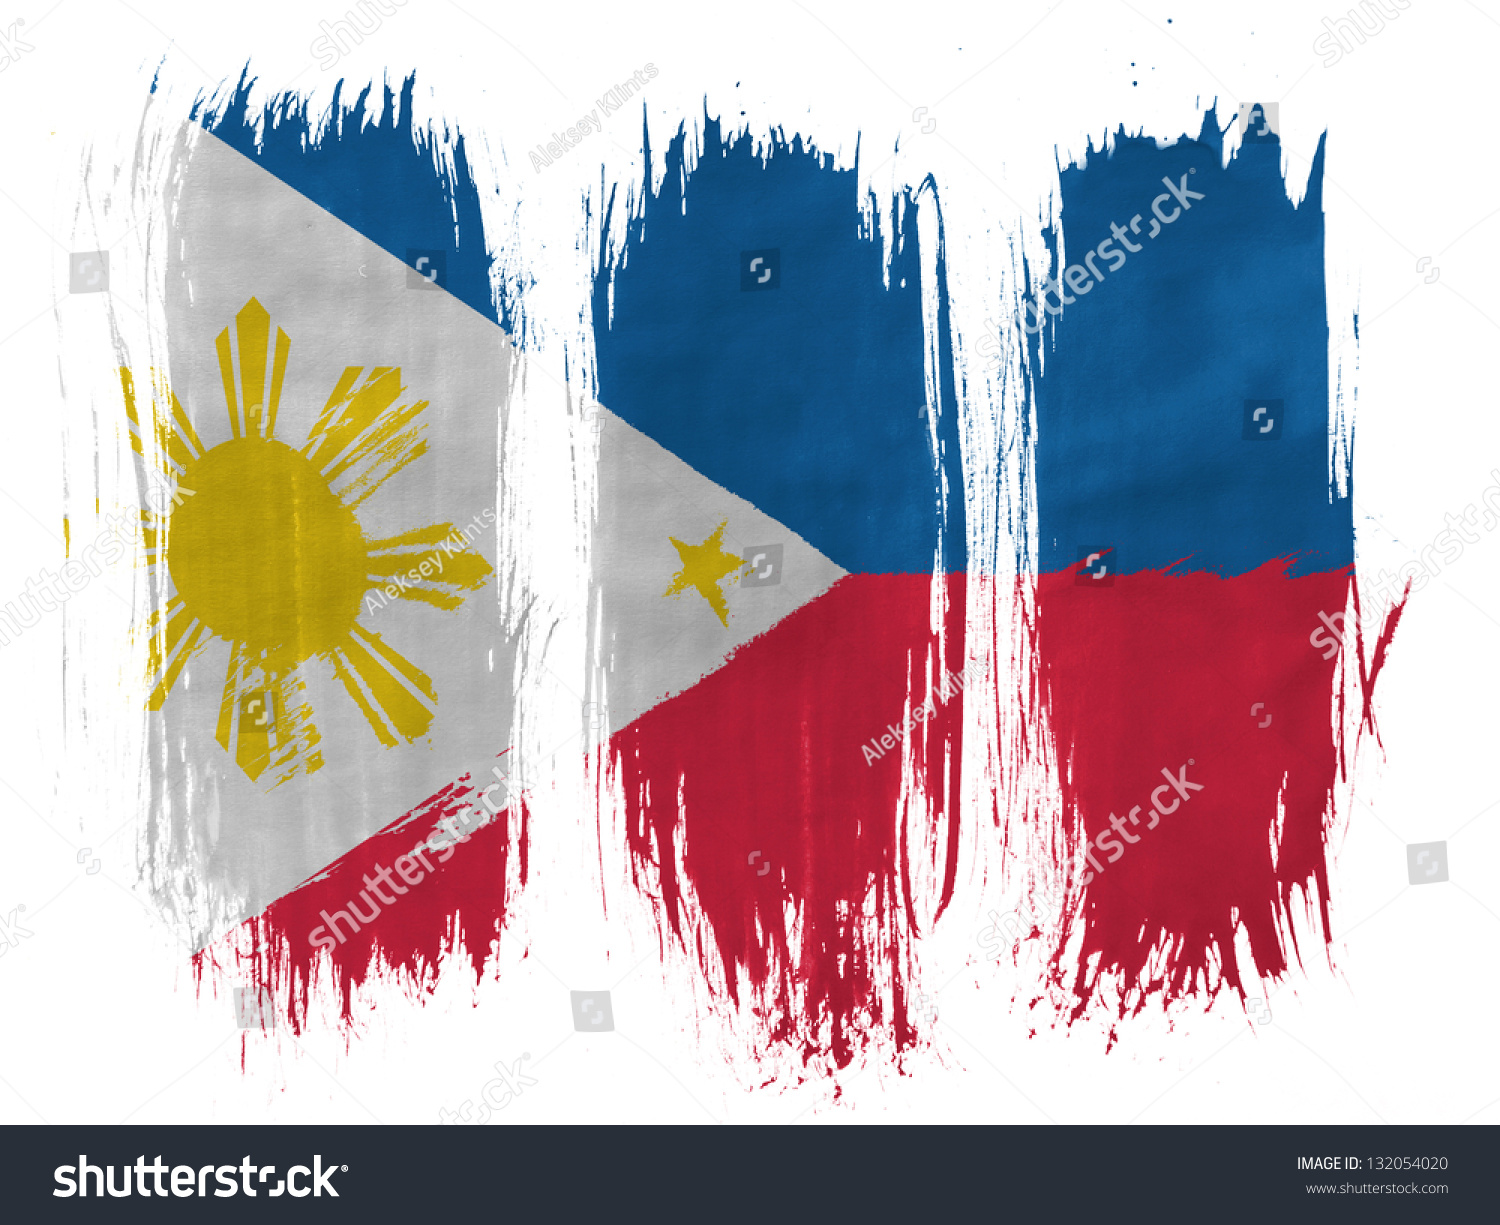 philippine flag painted 3 vertical brush stock photo edit now 132054020 https www shutterstock com image photo philippine flag painted 3 vertical brush 132054020